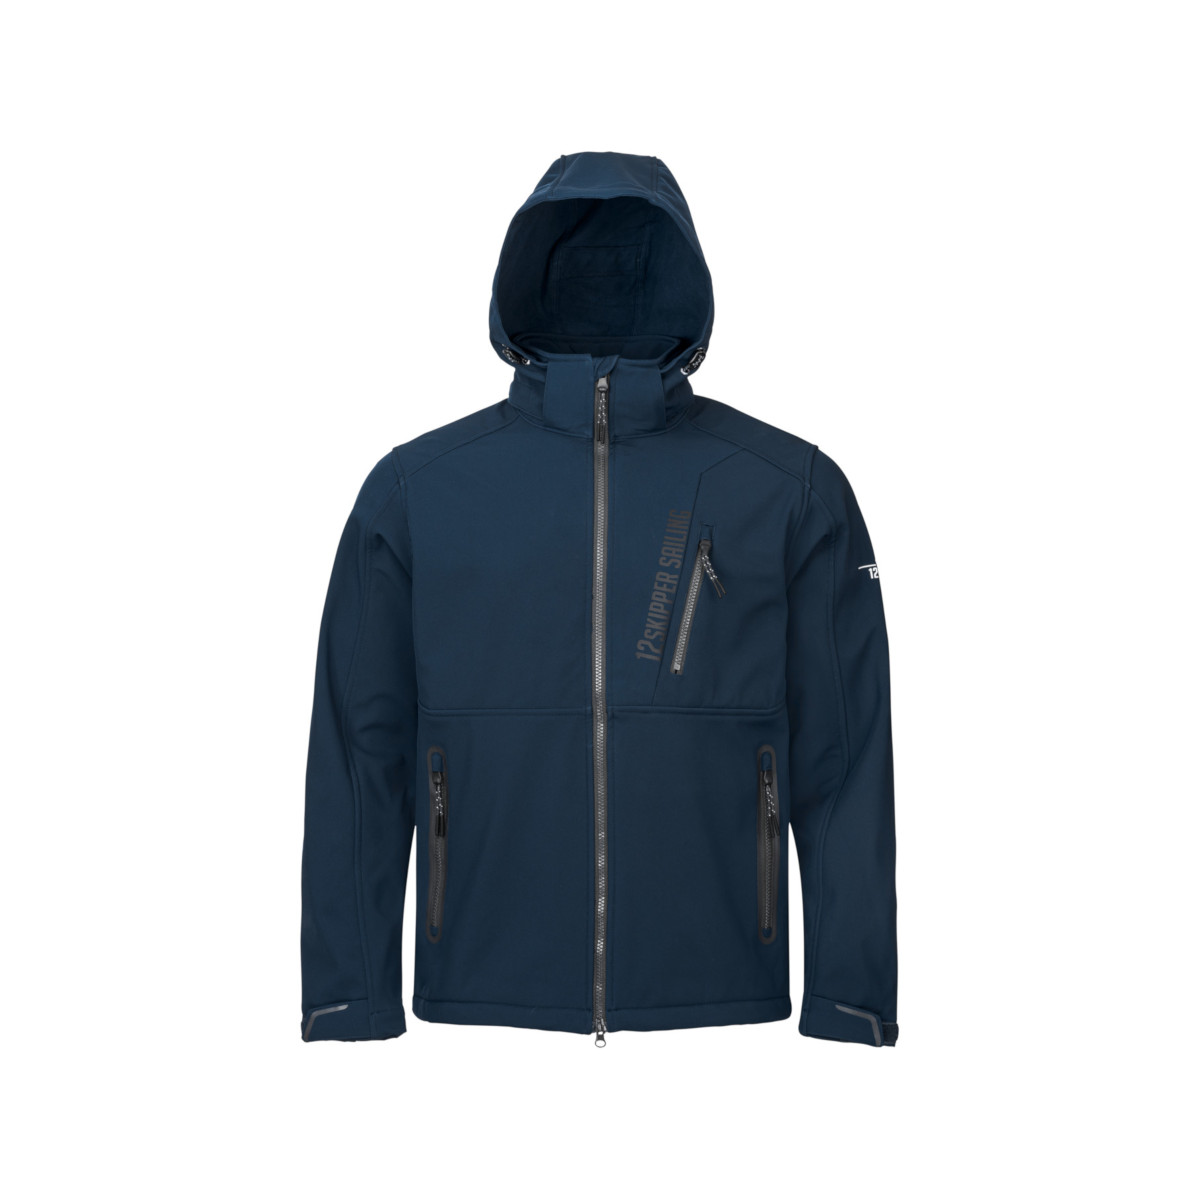 12skipper Amundsen veste softshell unisexe - bleu marine, taille L